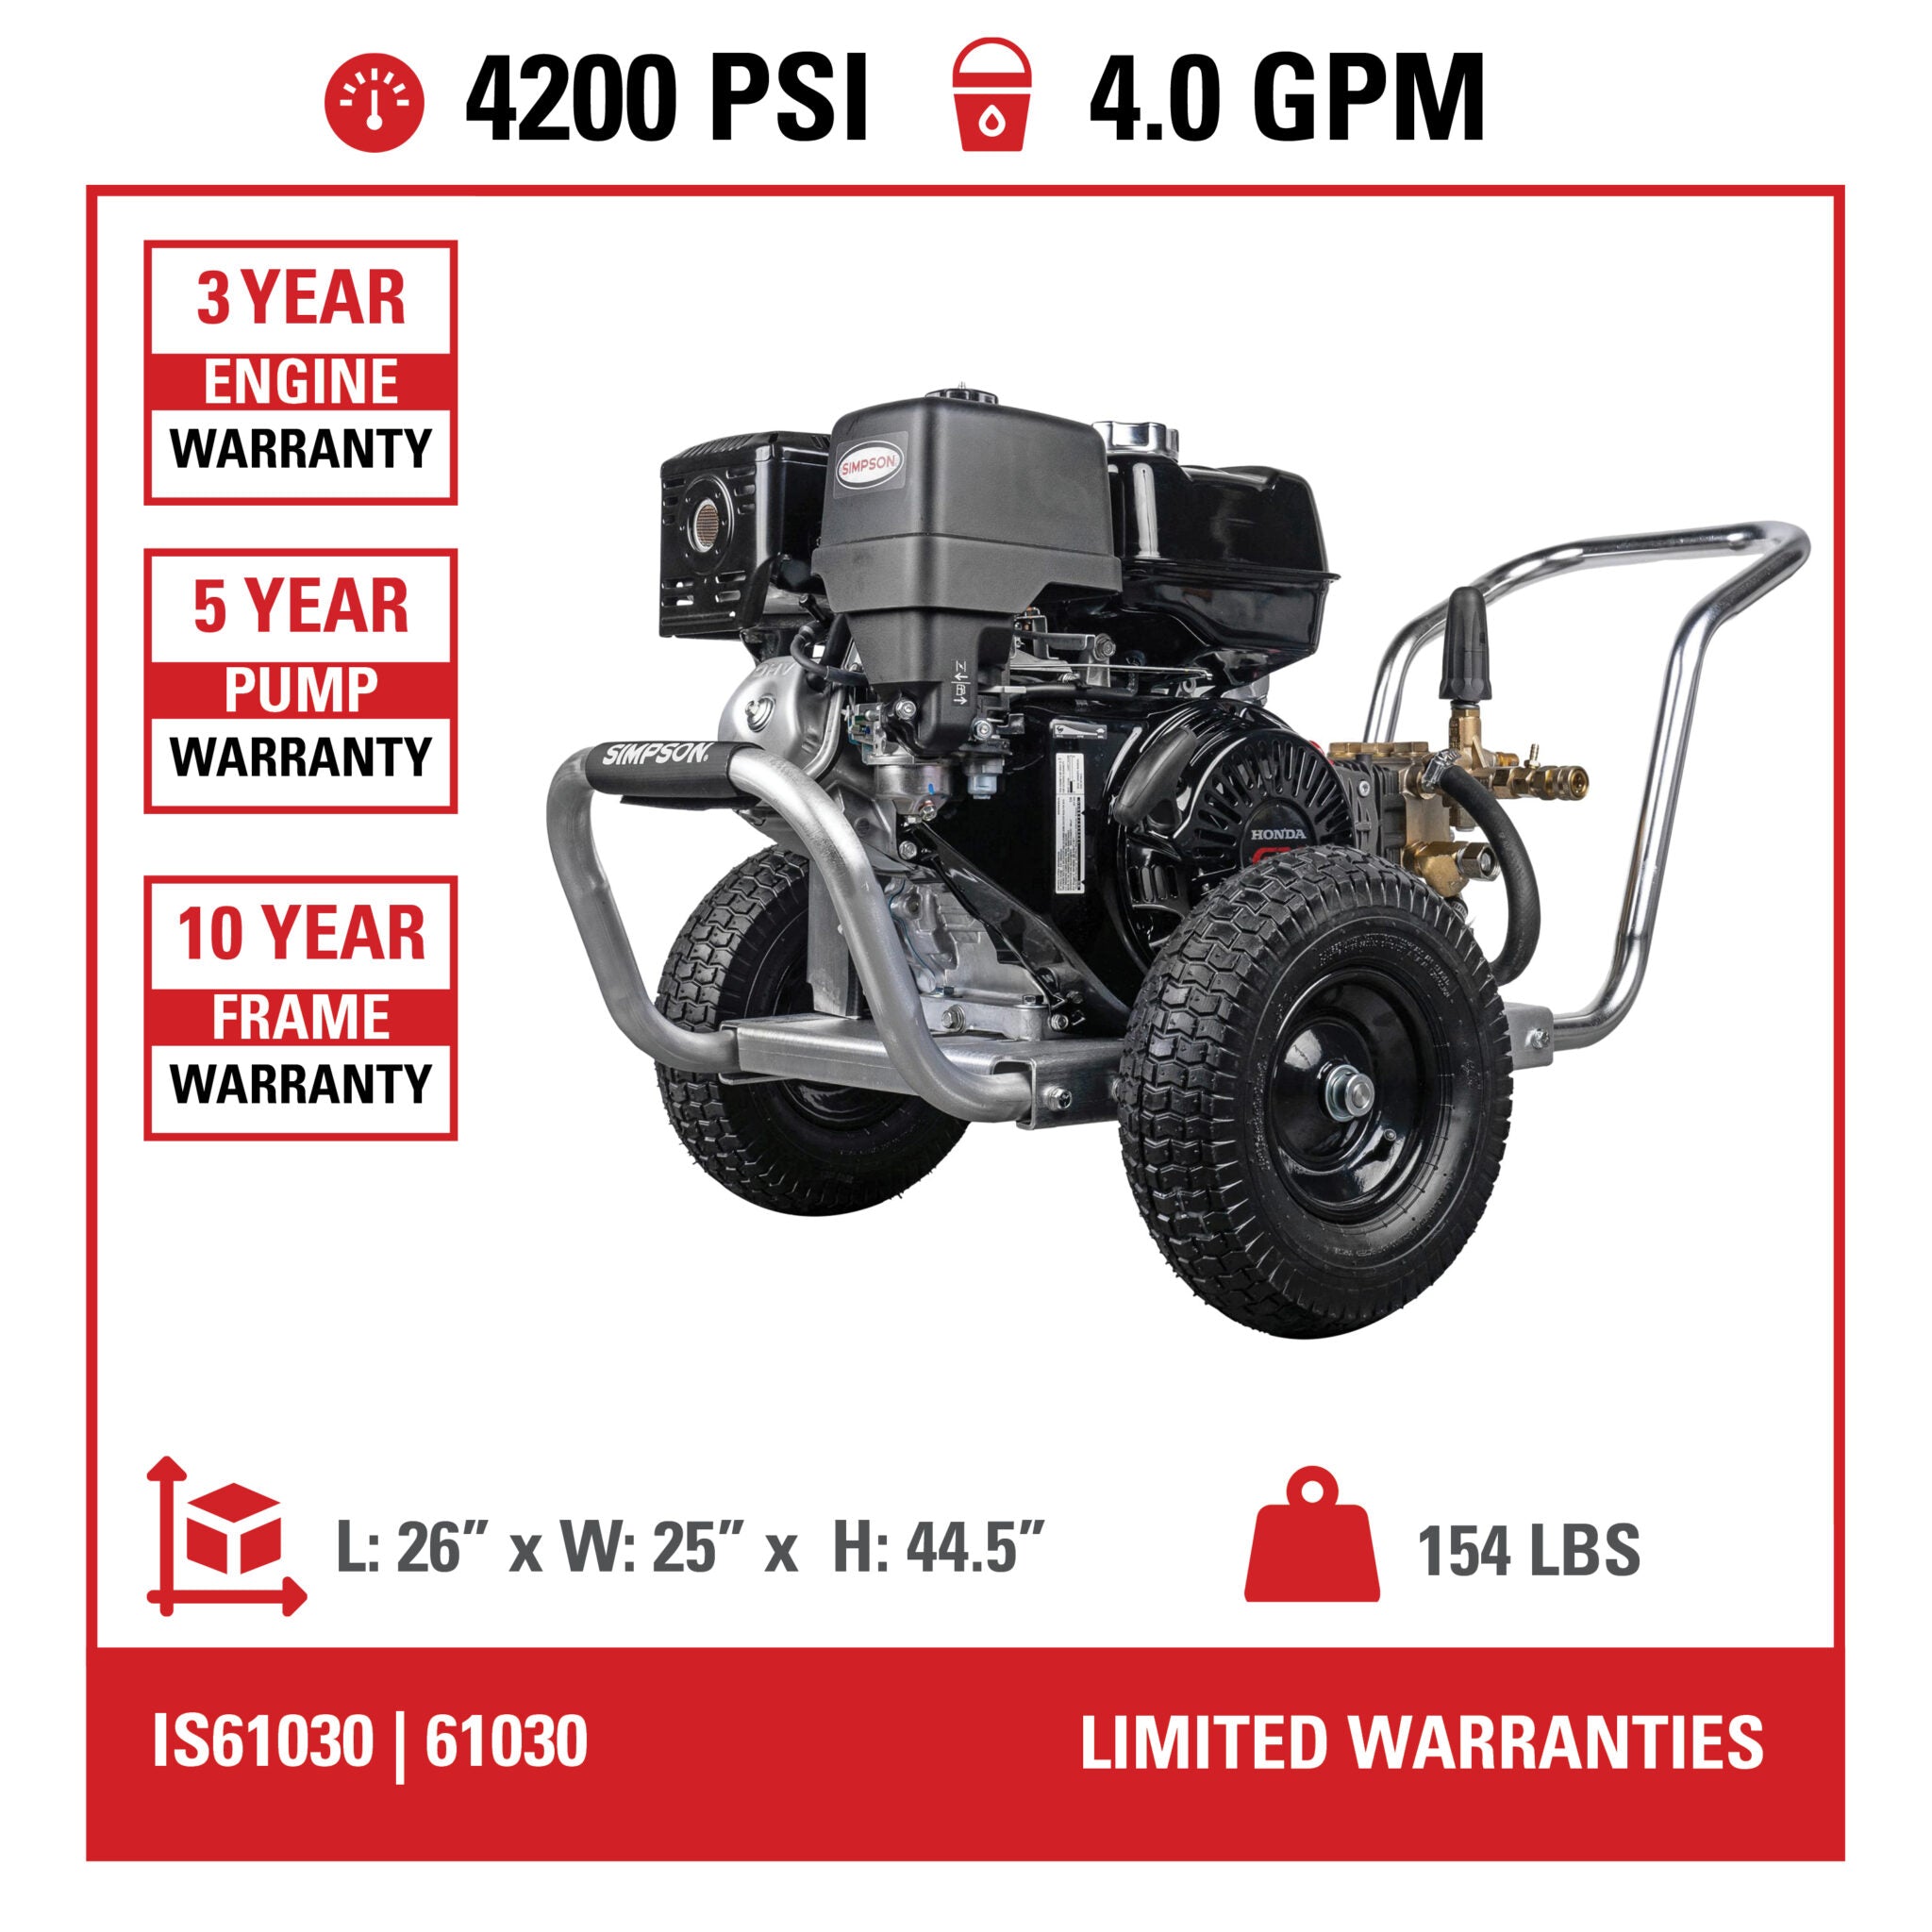 4200 PSI @ 4 GPM Belt Drive Honda GX390 Gas Pressure Washer w/ Comet Pump